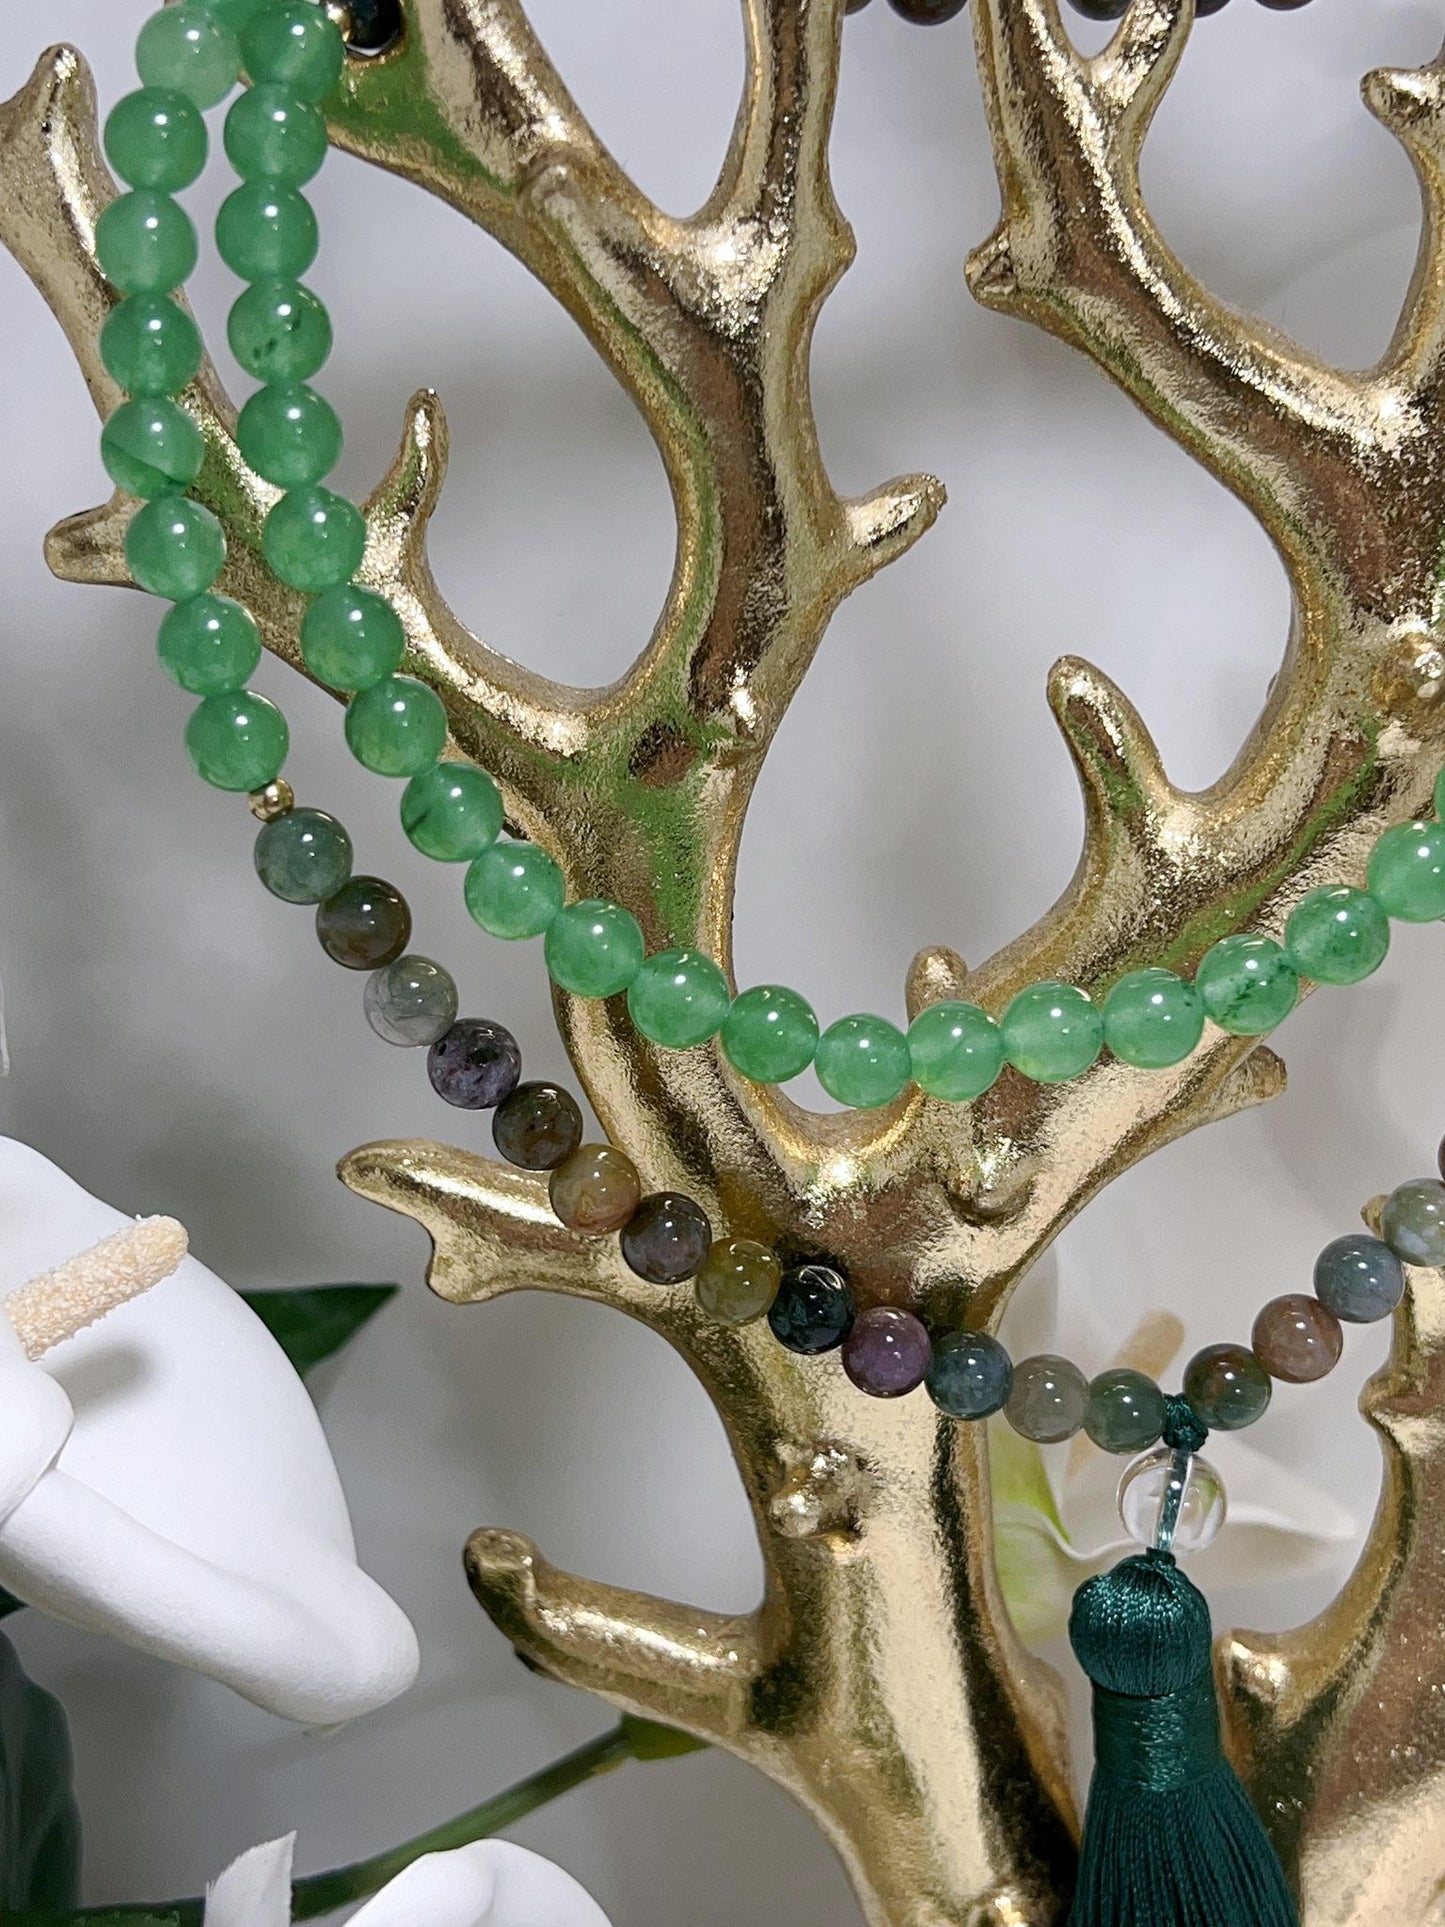 Aventurine - Ocean Jasper Mala Beads with Green Tassel